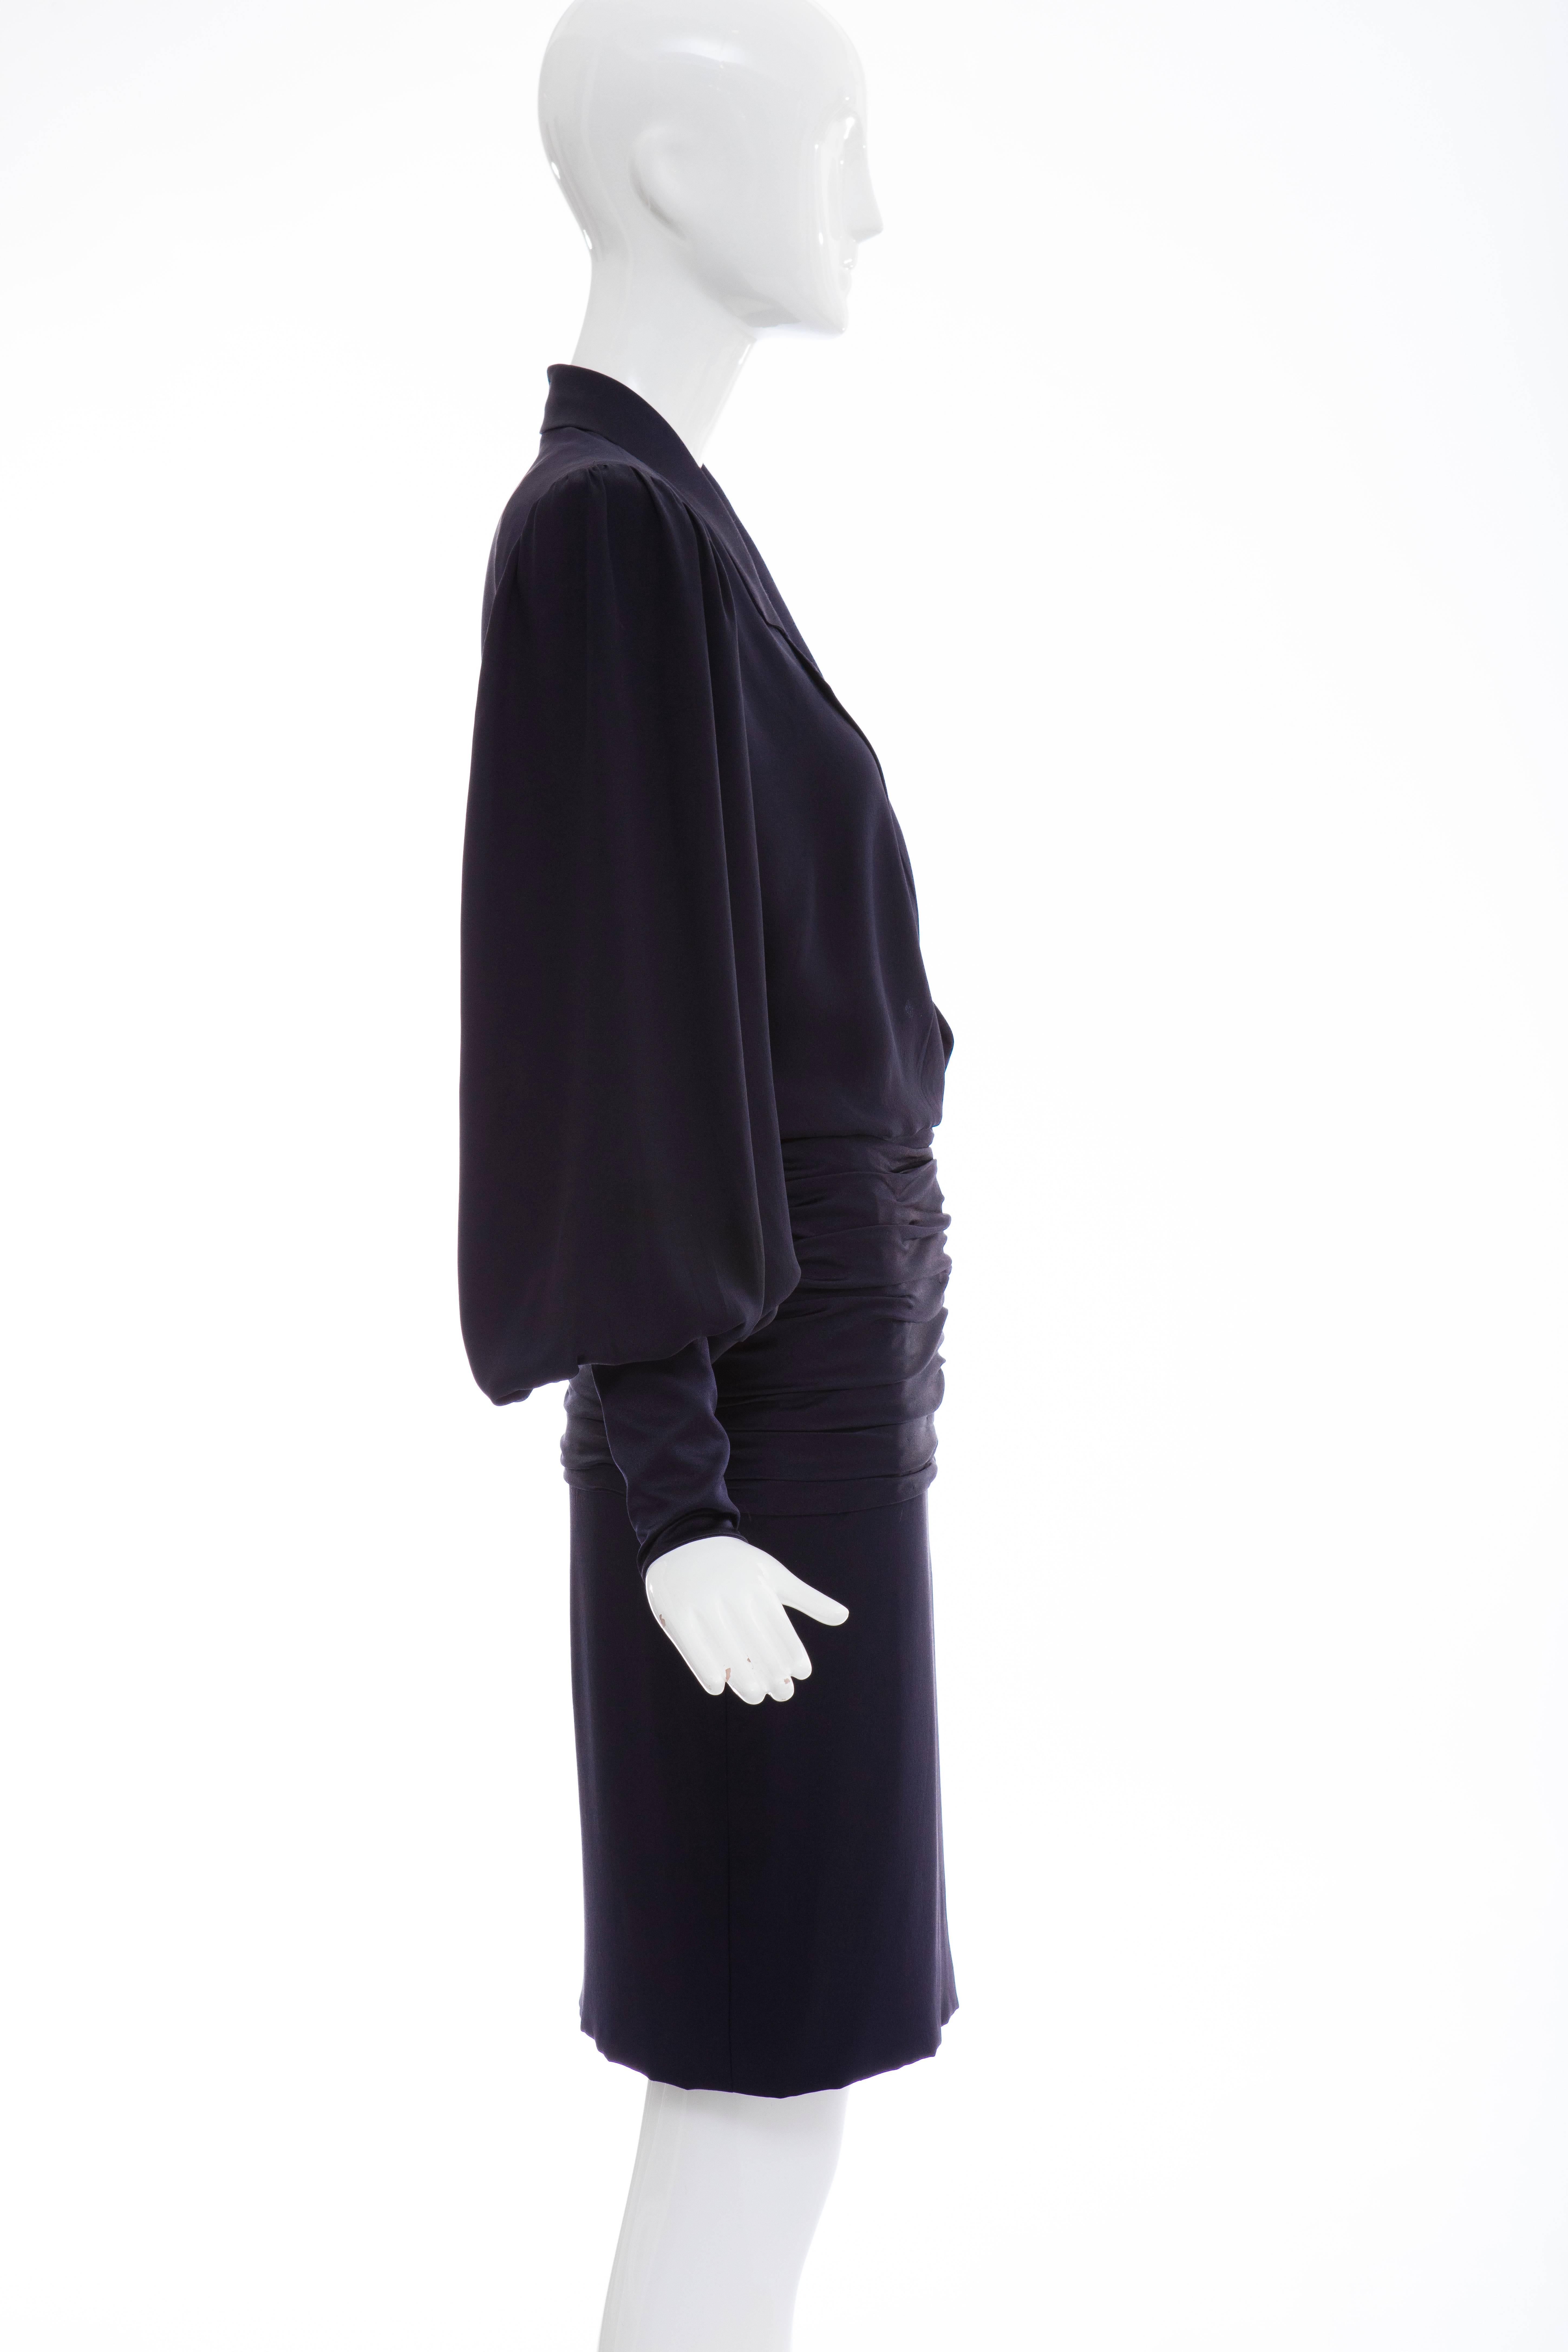 Jean - Louis Scherrer Haute Couture Navy Silk Crepe & Satin Dress, Circa 1980's In Excellent Condition For Sale In Cincinnati, OH